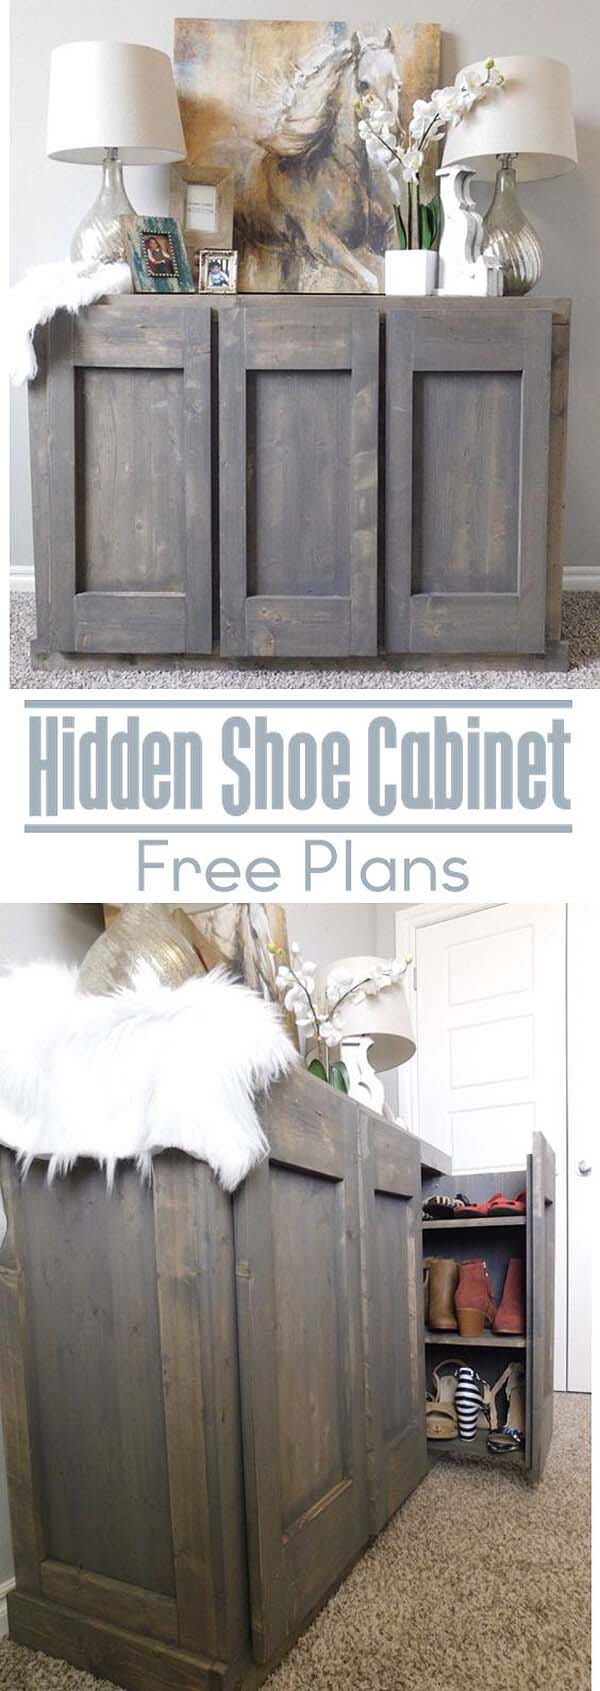 Hidden Shoe Cabinet #rustic #storage #organization #decorhomeideas